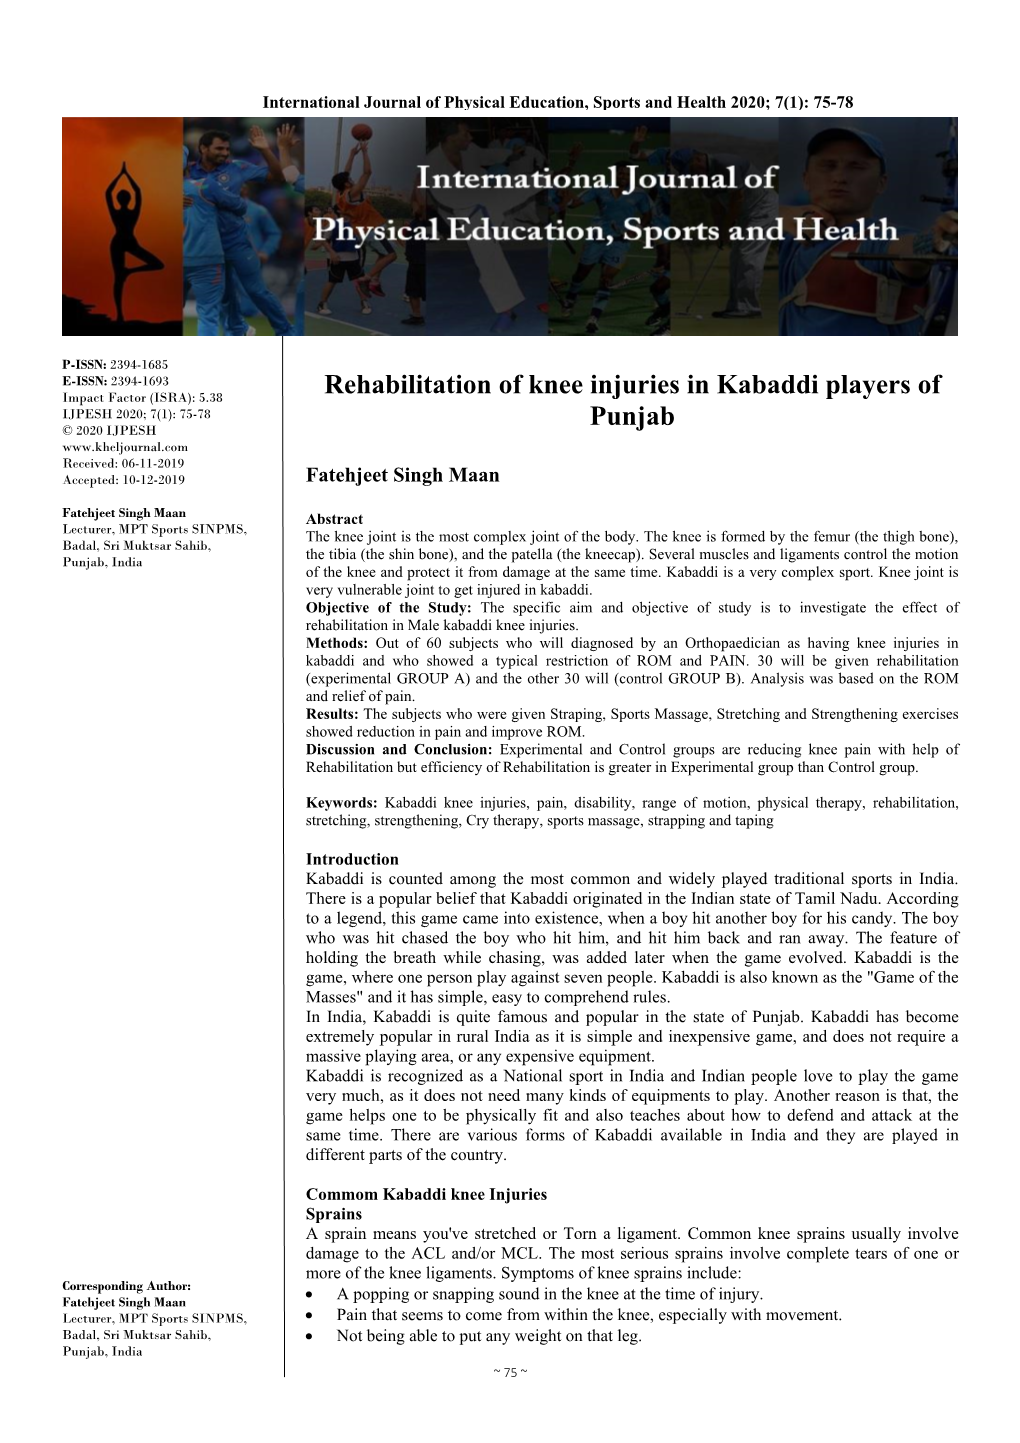 Rehabilitation of Knee Injuries in Kabaddi Players of Punjab